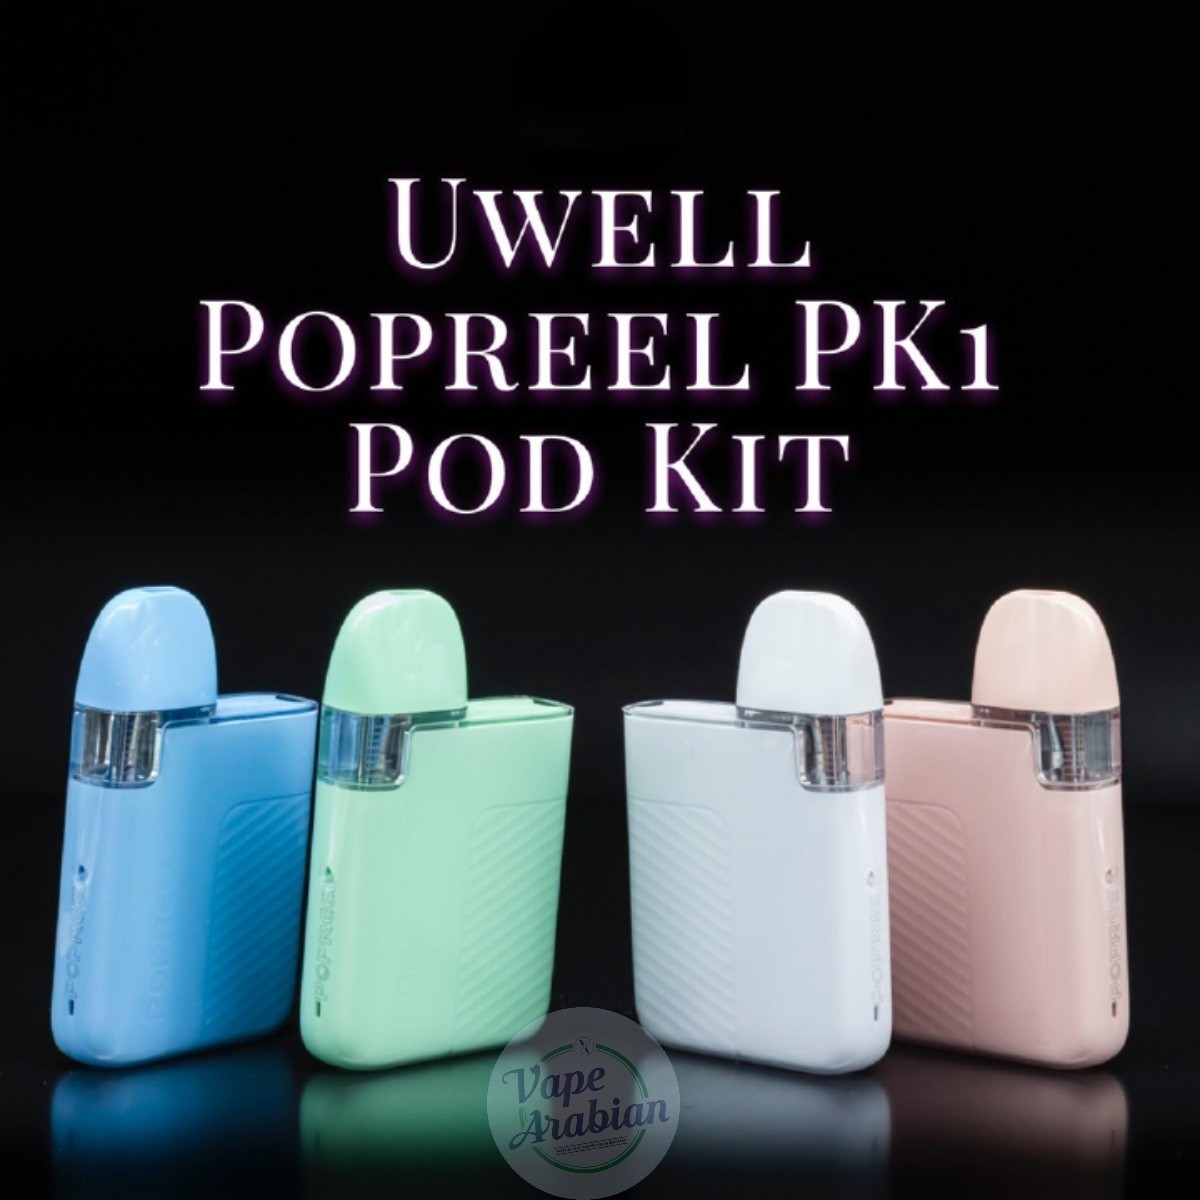 Uwell Popreel Pk1 Pod System Kit In UAE